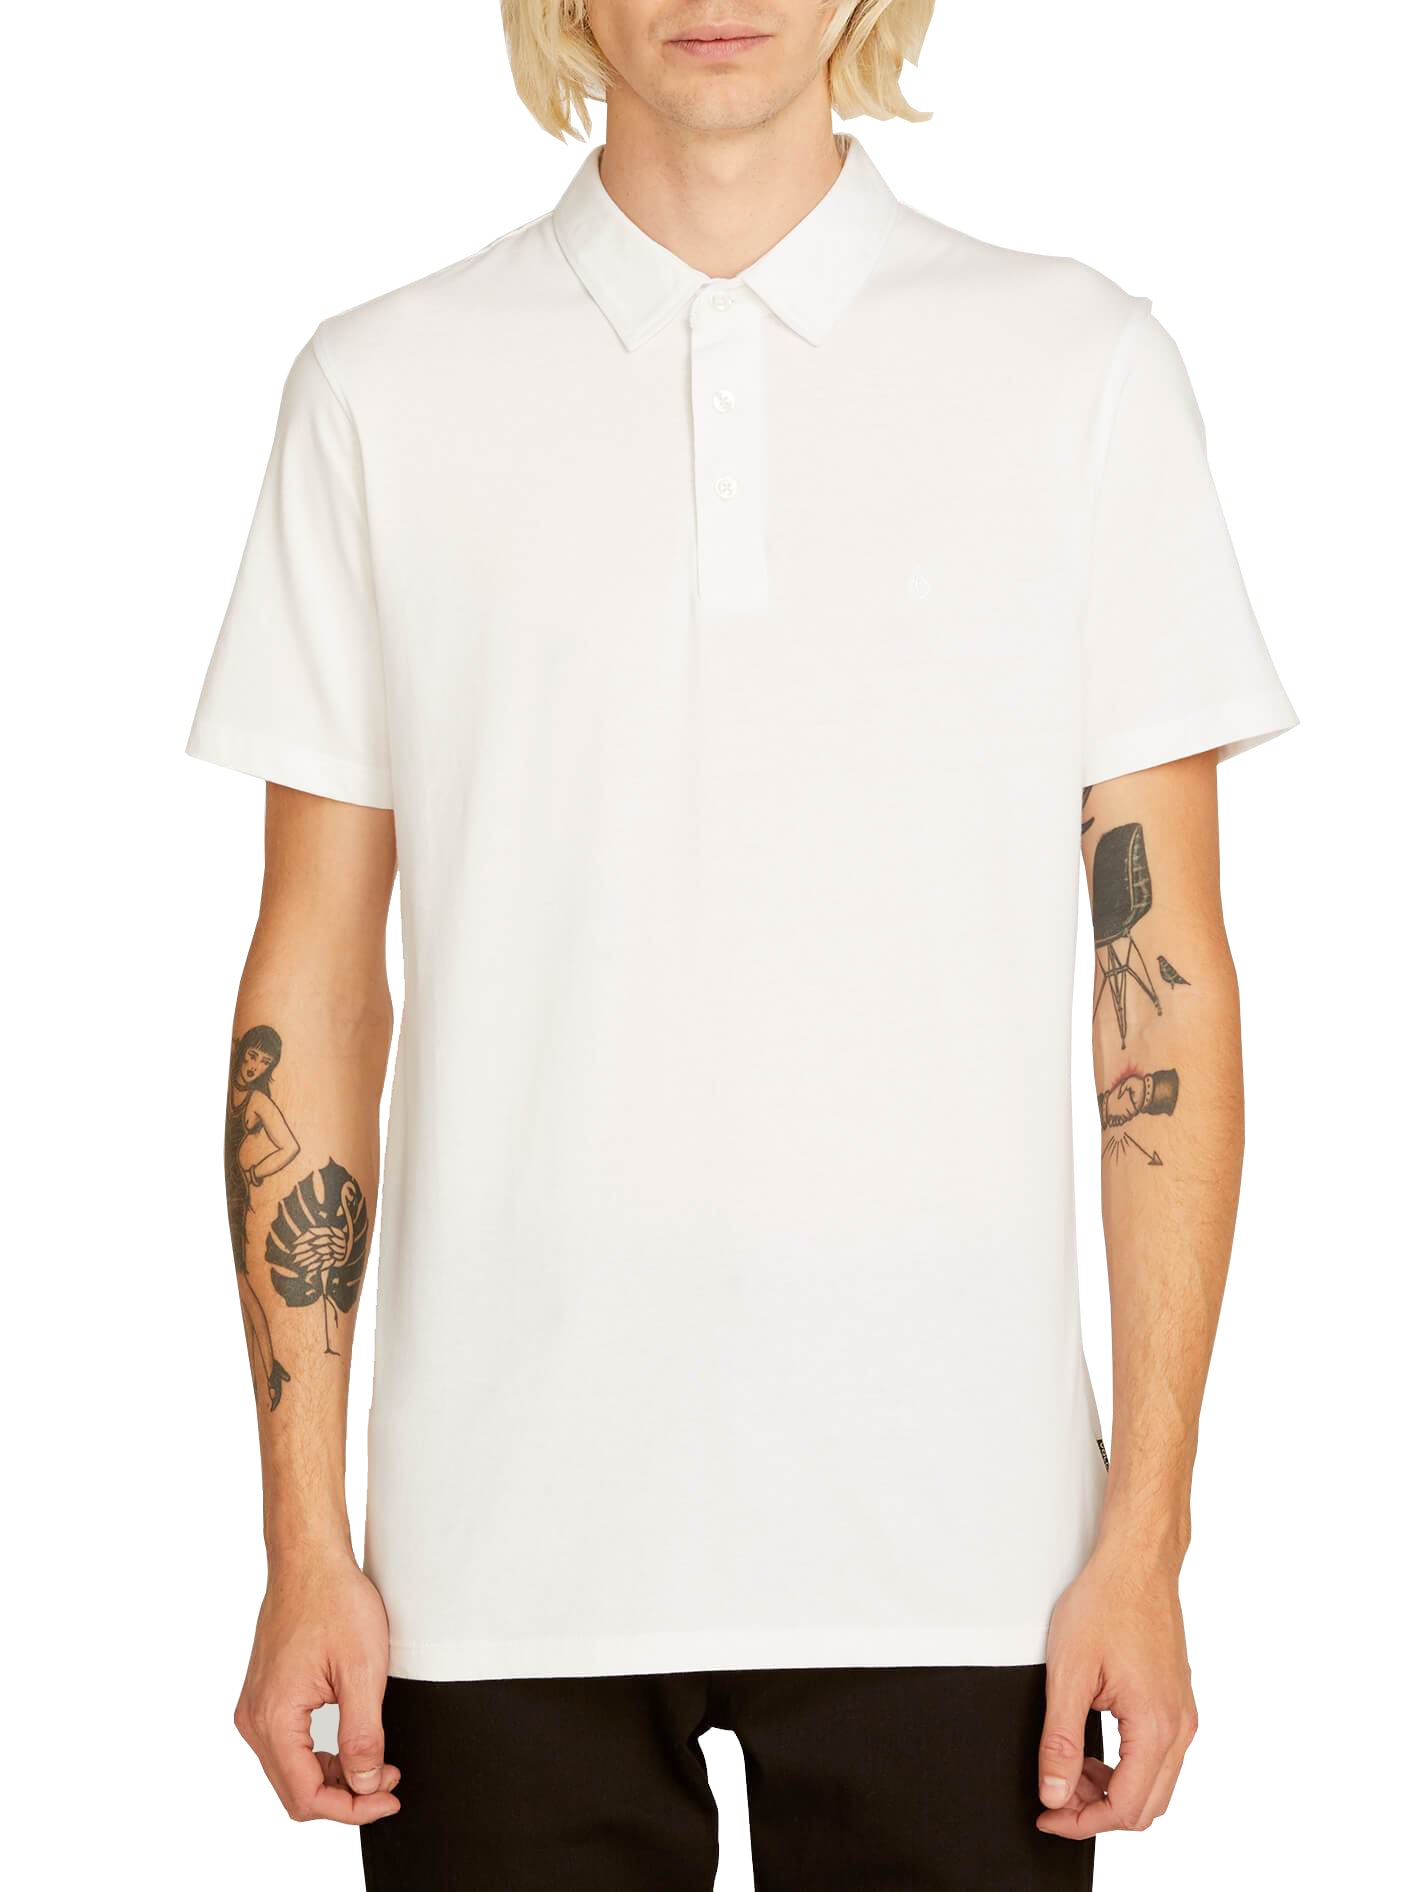 Volcom Wowzer Polo S/S Shirt White L